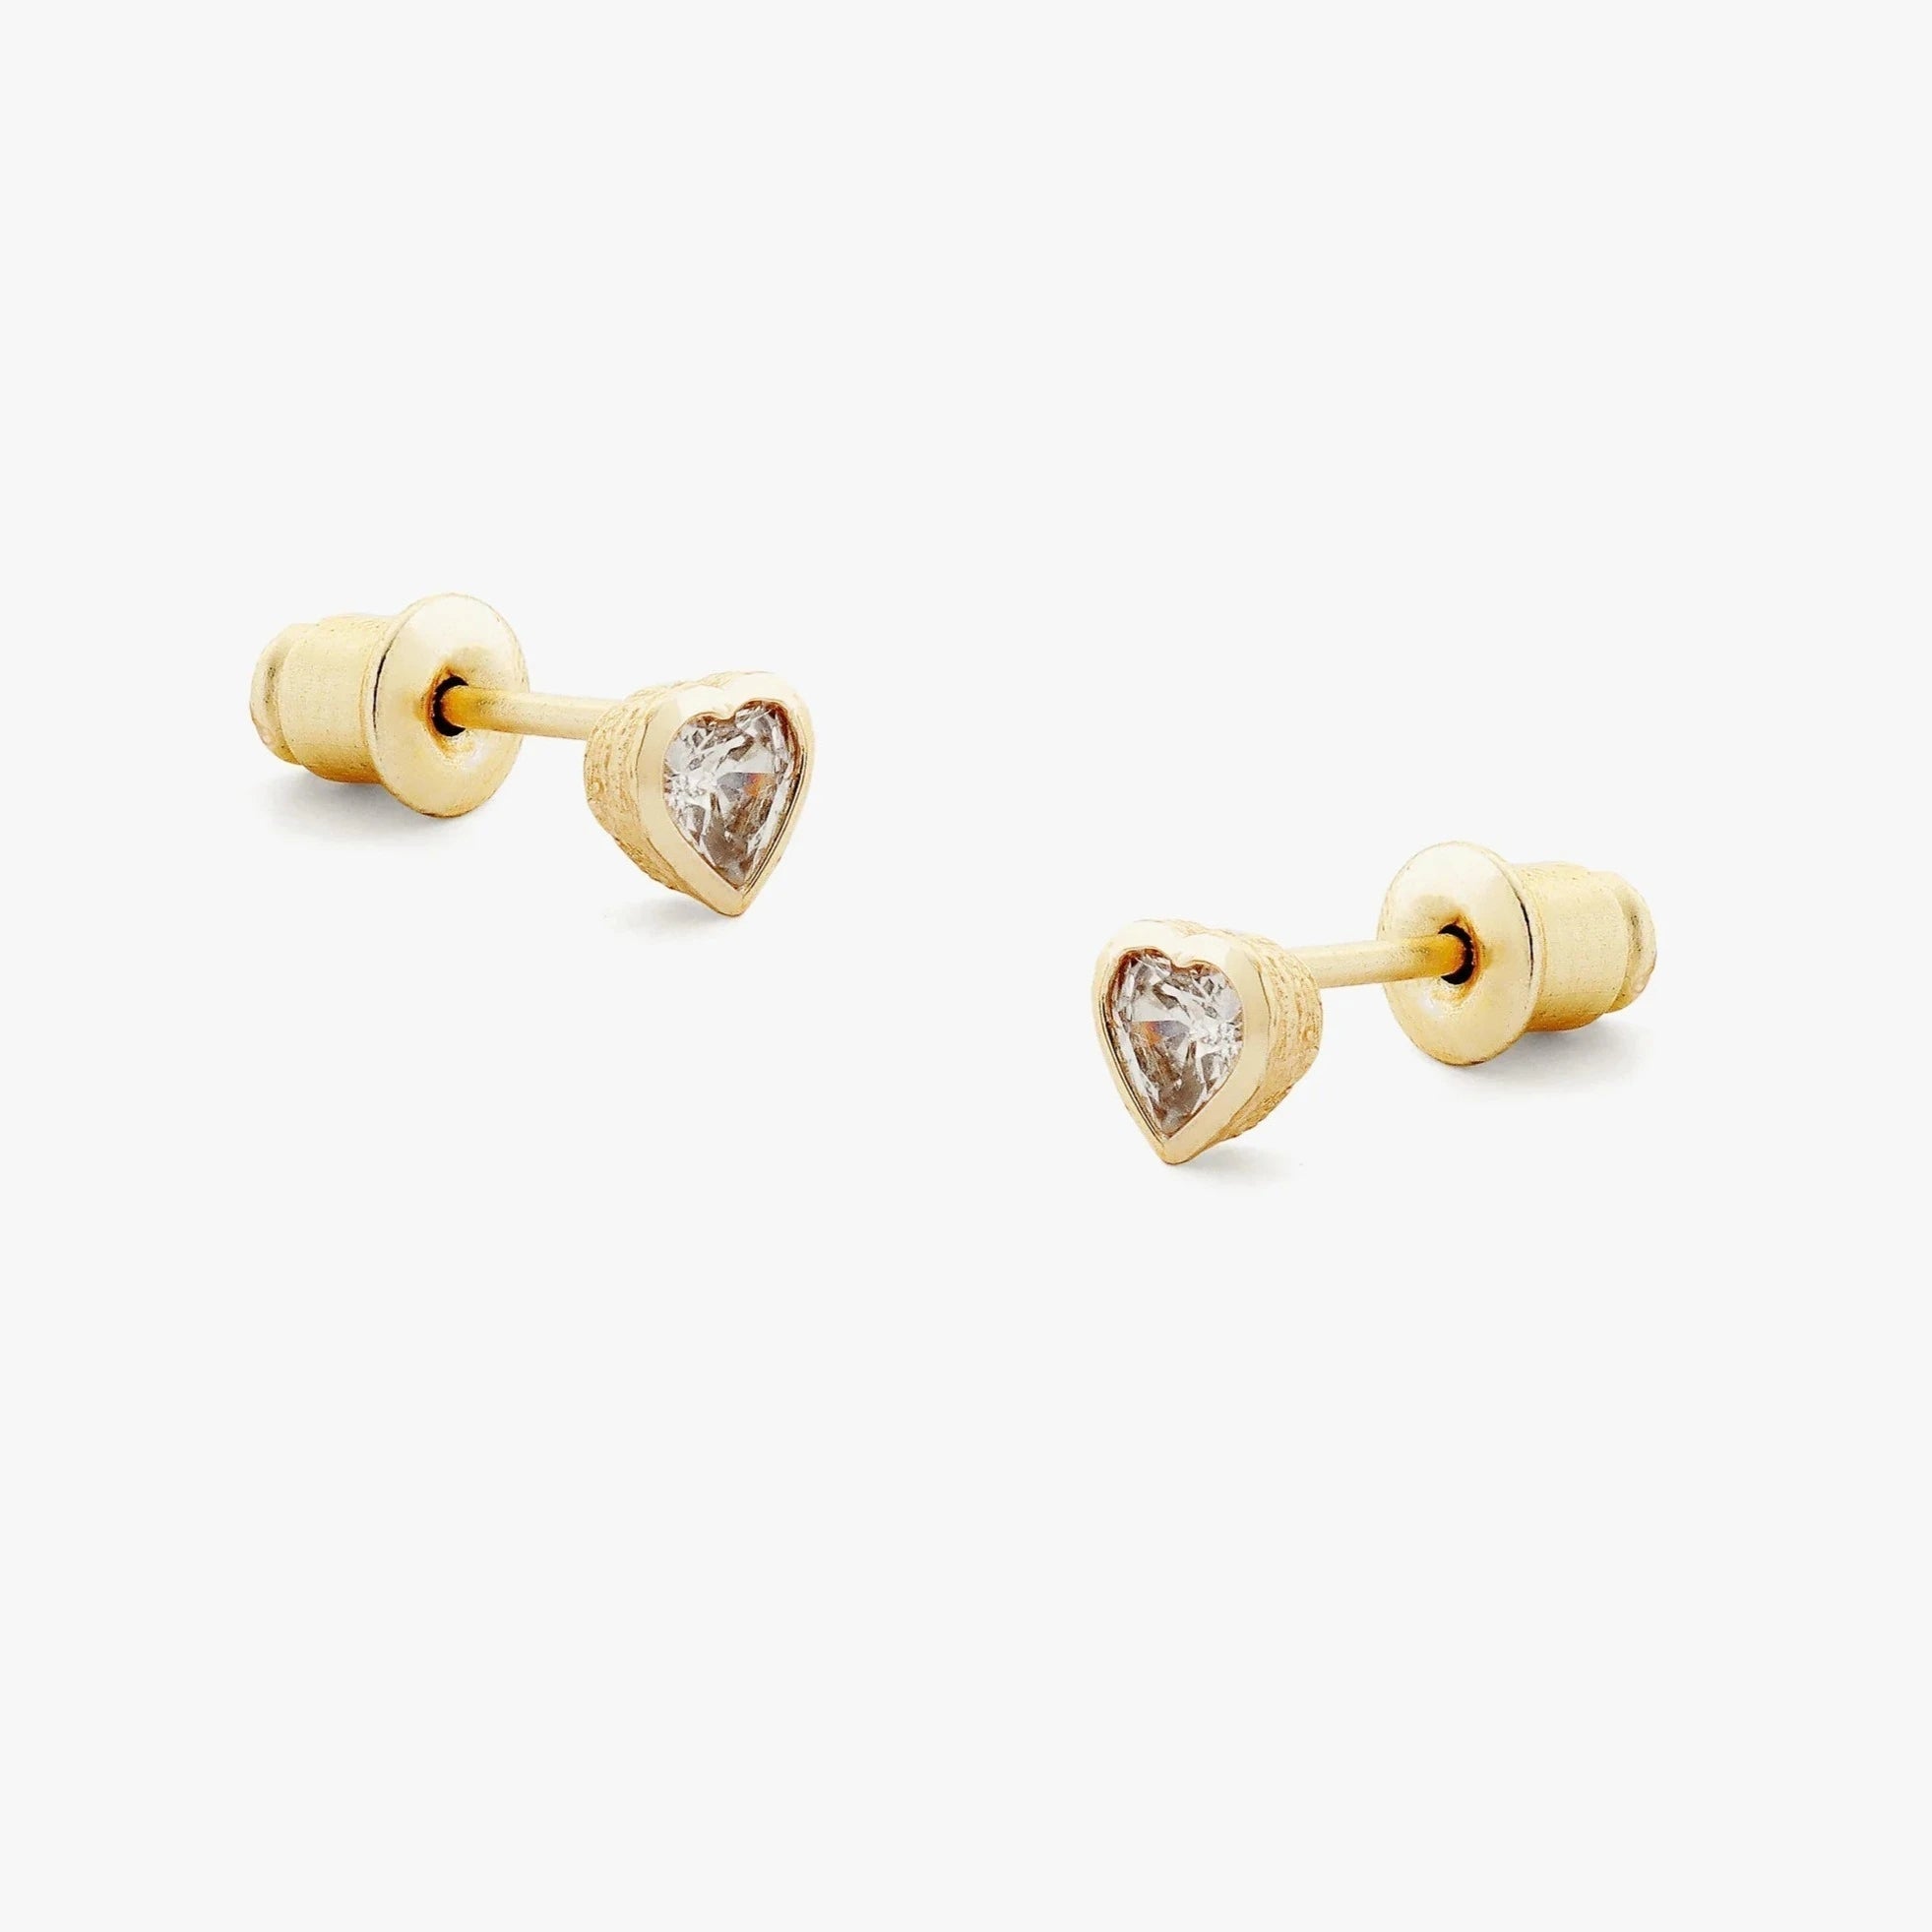 Cupid Earrings Gold - The Nancy Smillie Shop - Art, Jewellery & Designer Gifts Glasgow